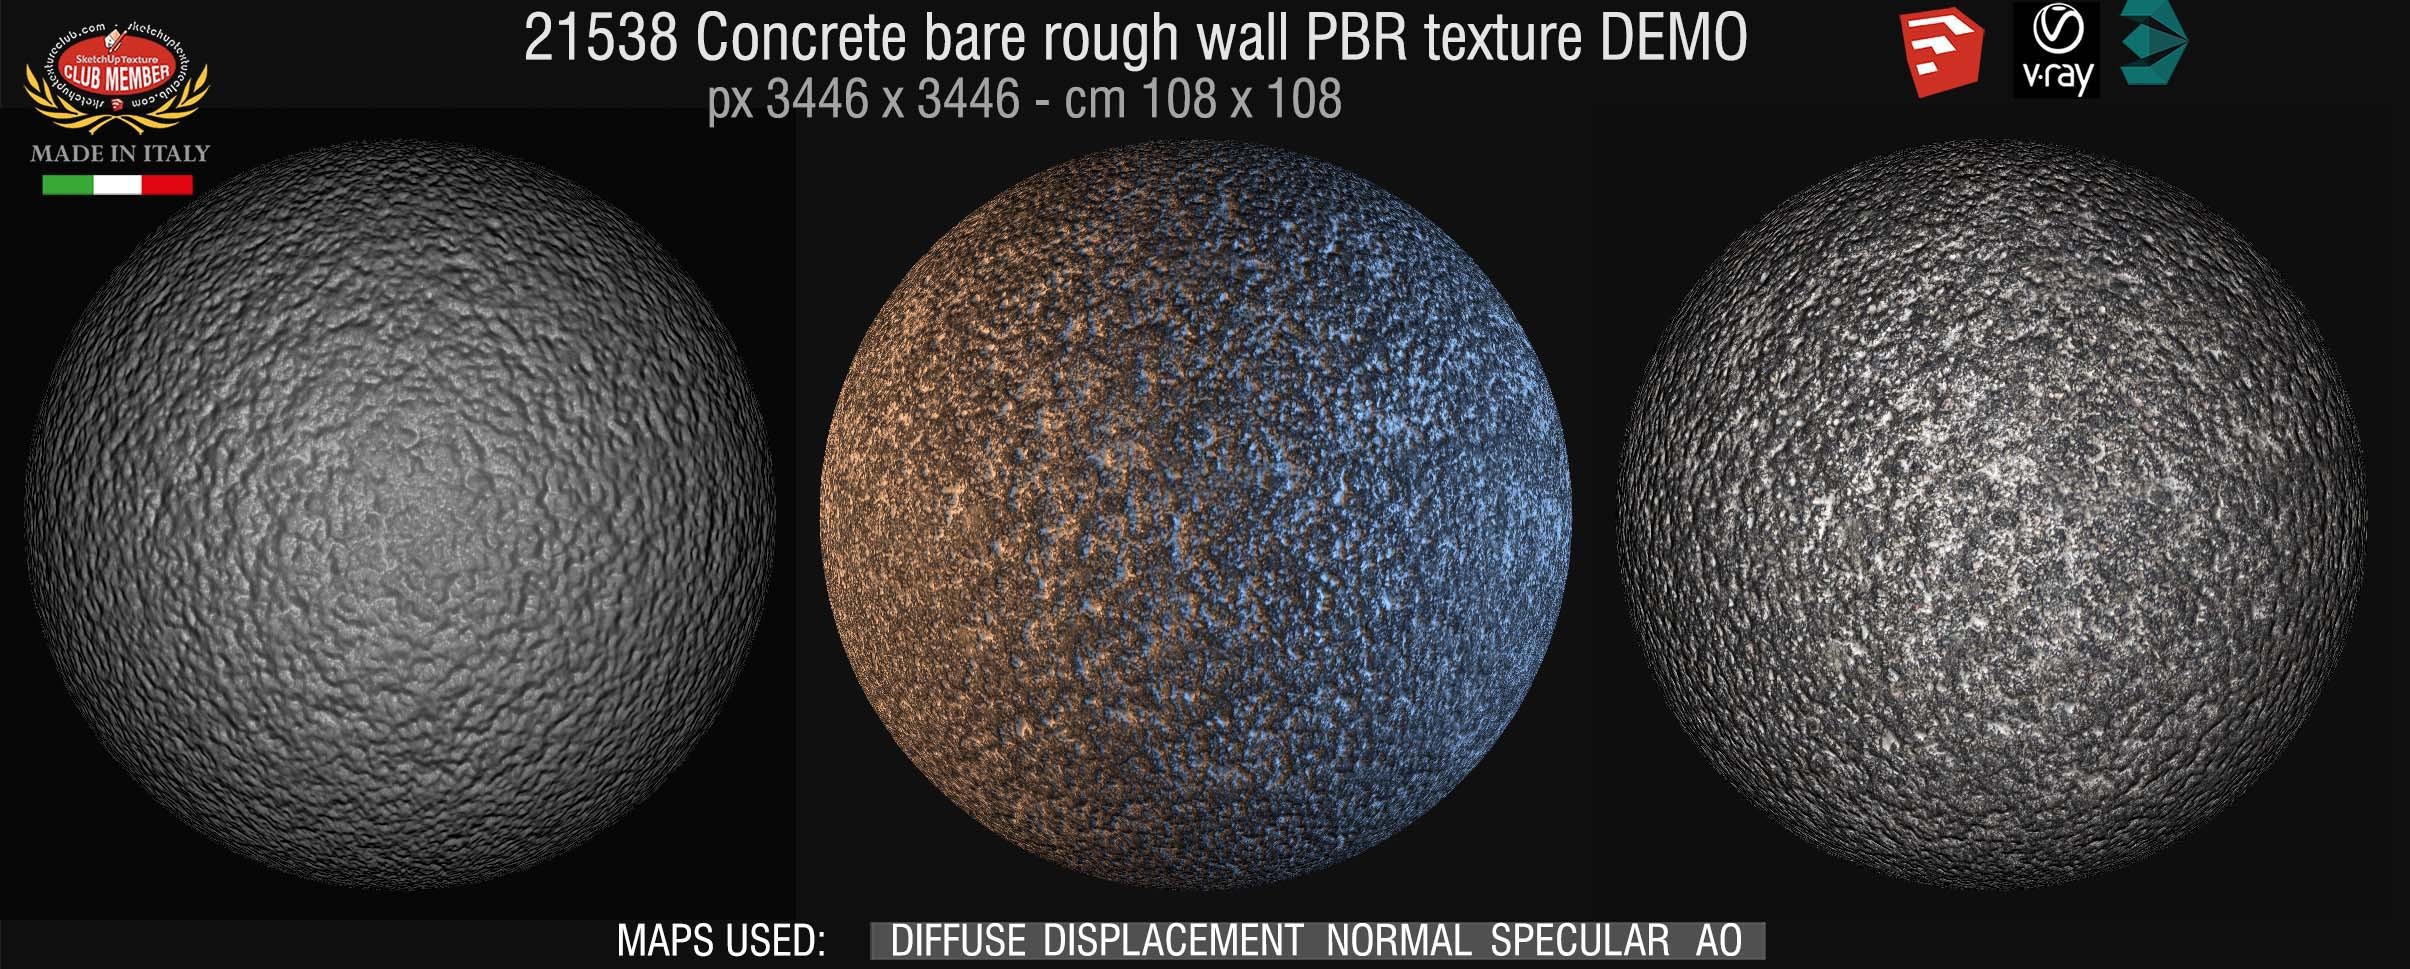 21538 Concrete bare rough wall PBR texture seamless DEMO